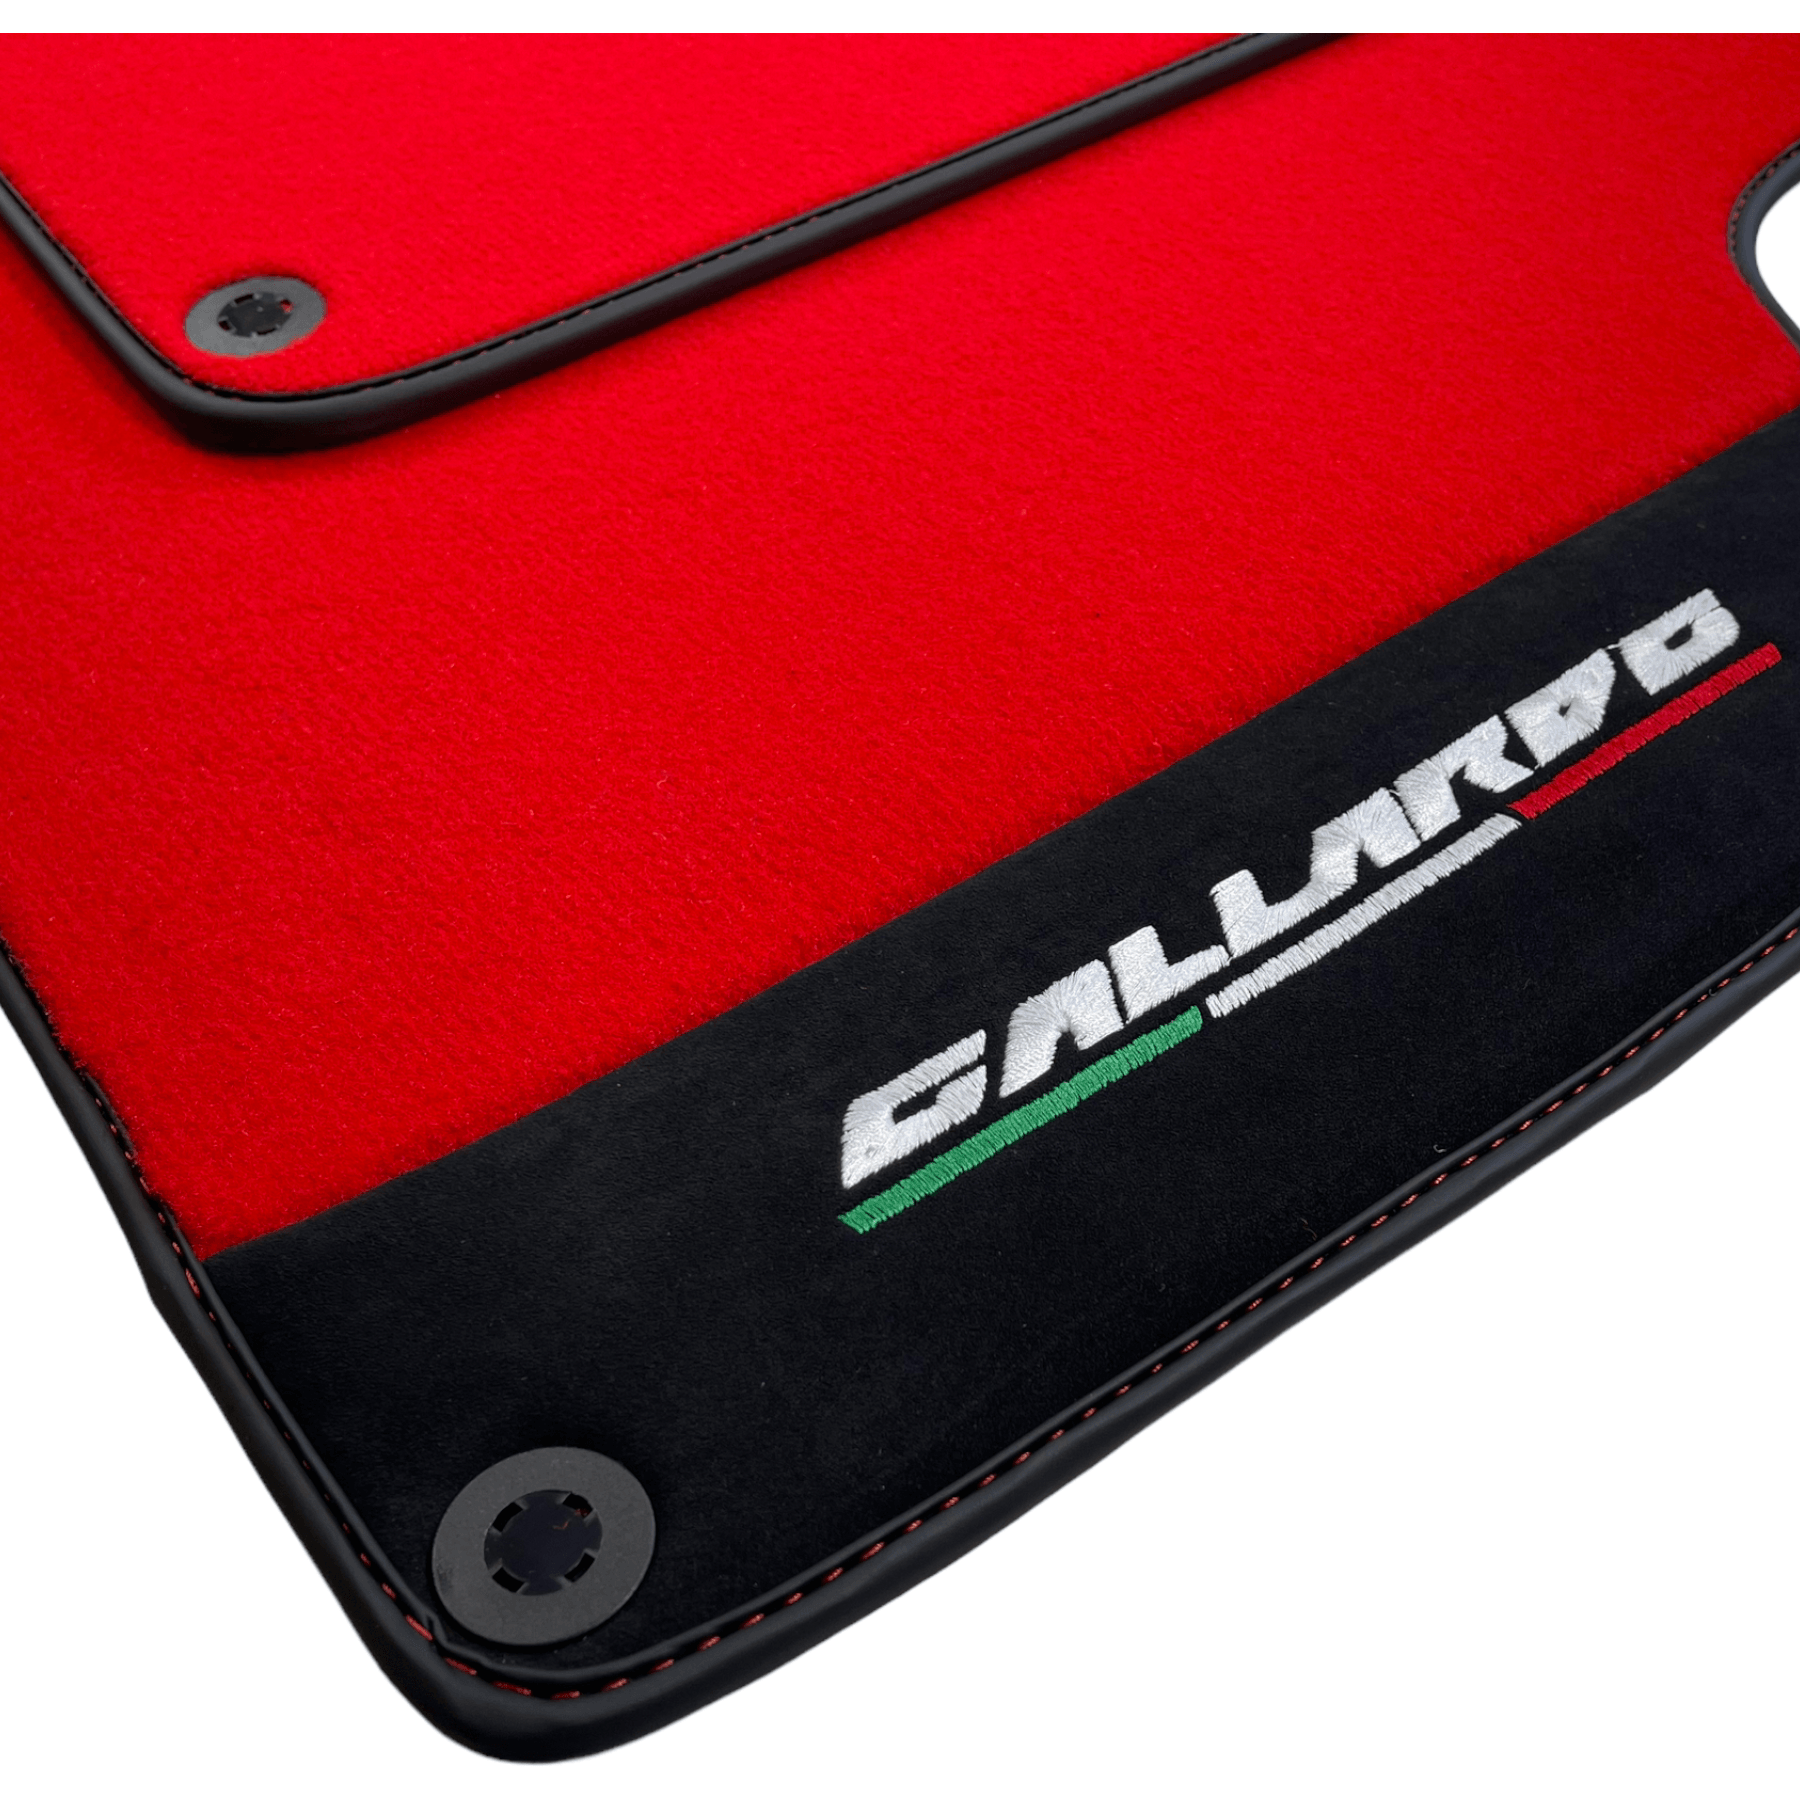 Red Floor Mats for Lamborghini Gallardo With Alcantara Leather - AutoWin